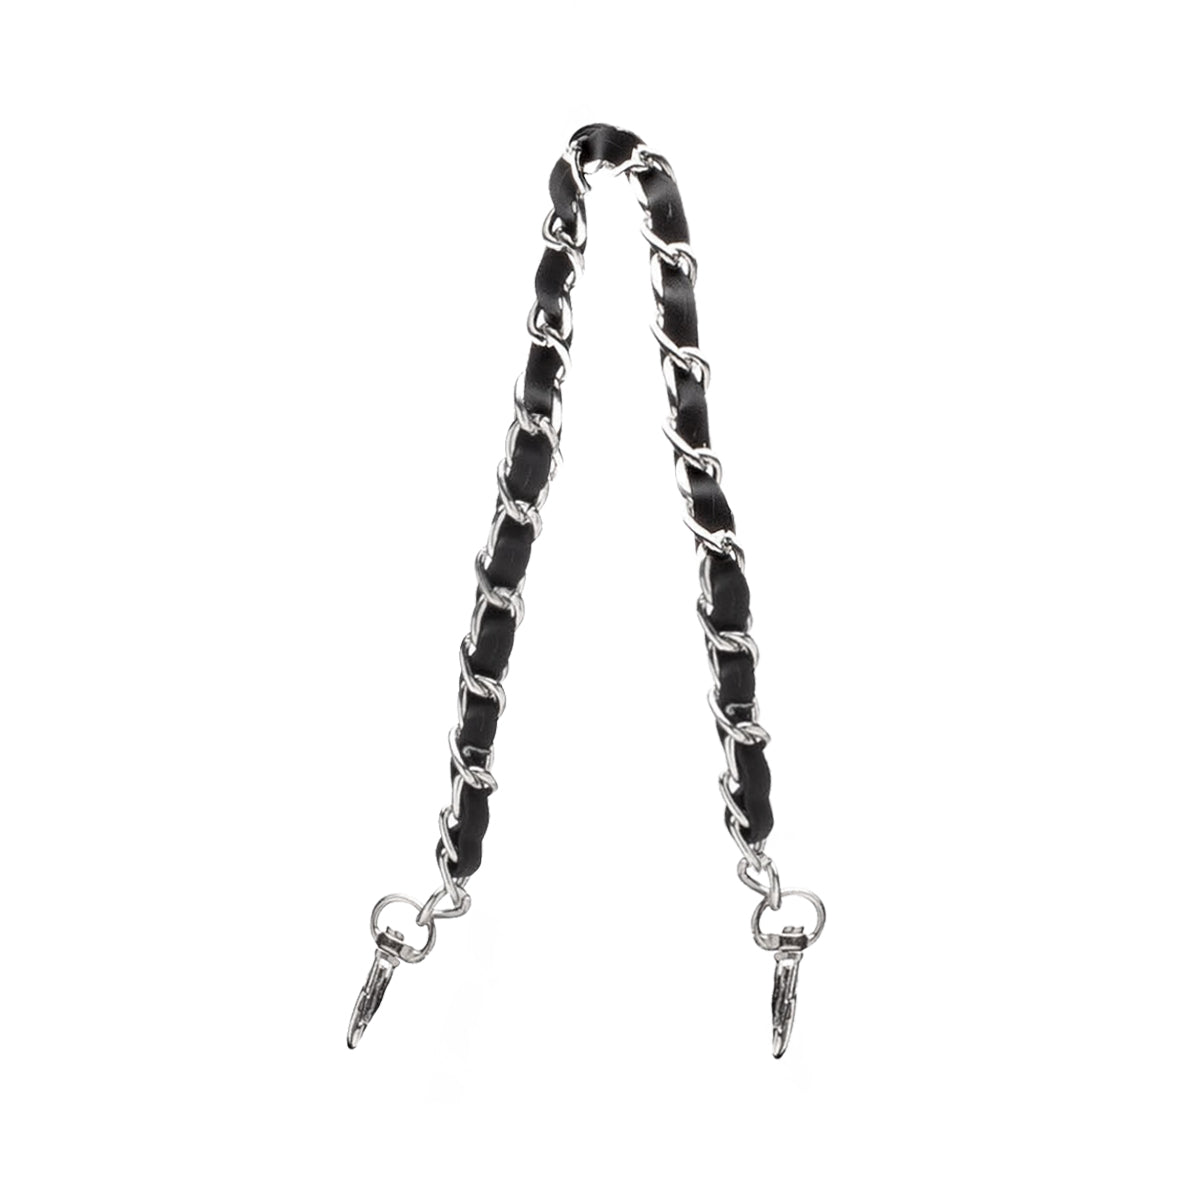 Wristlet Strap - Silver Metal Chain with Black